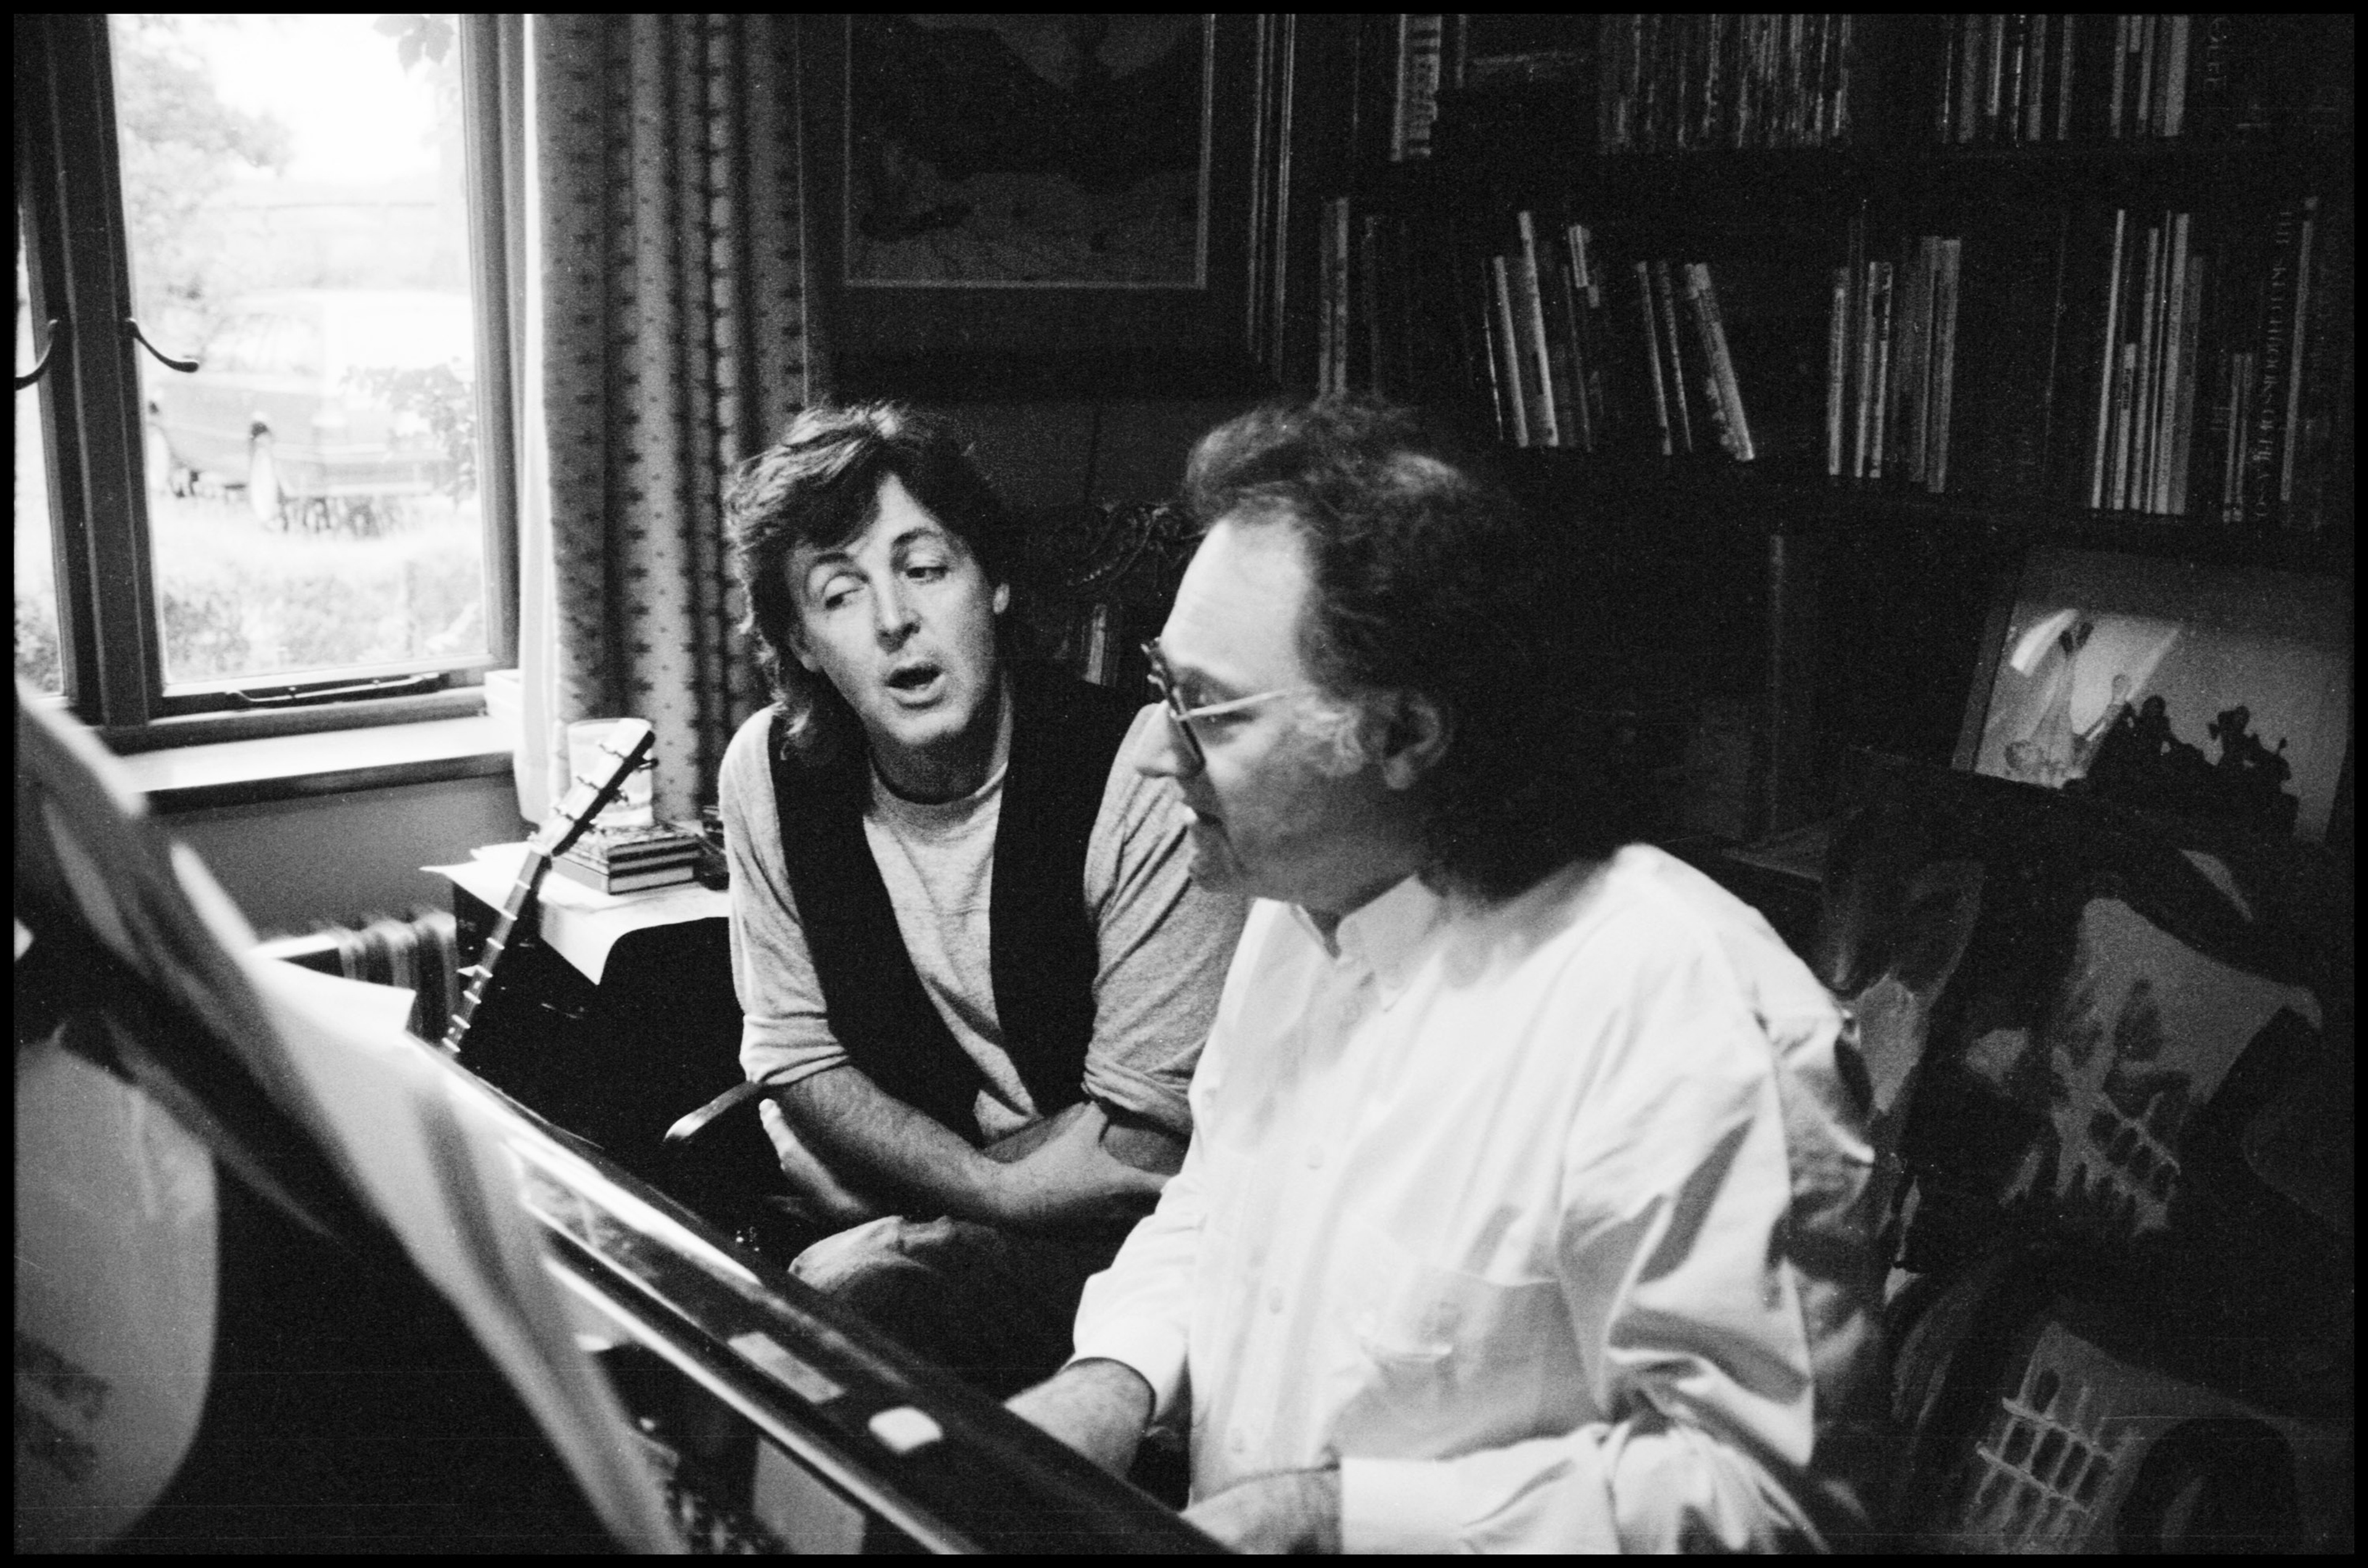 Paul and Carl Davis at the piano composing music